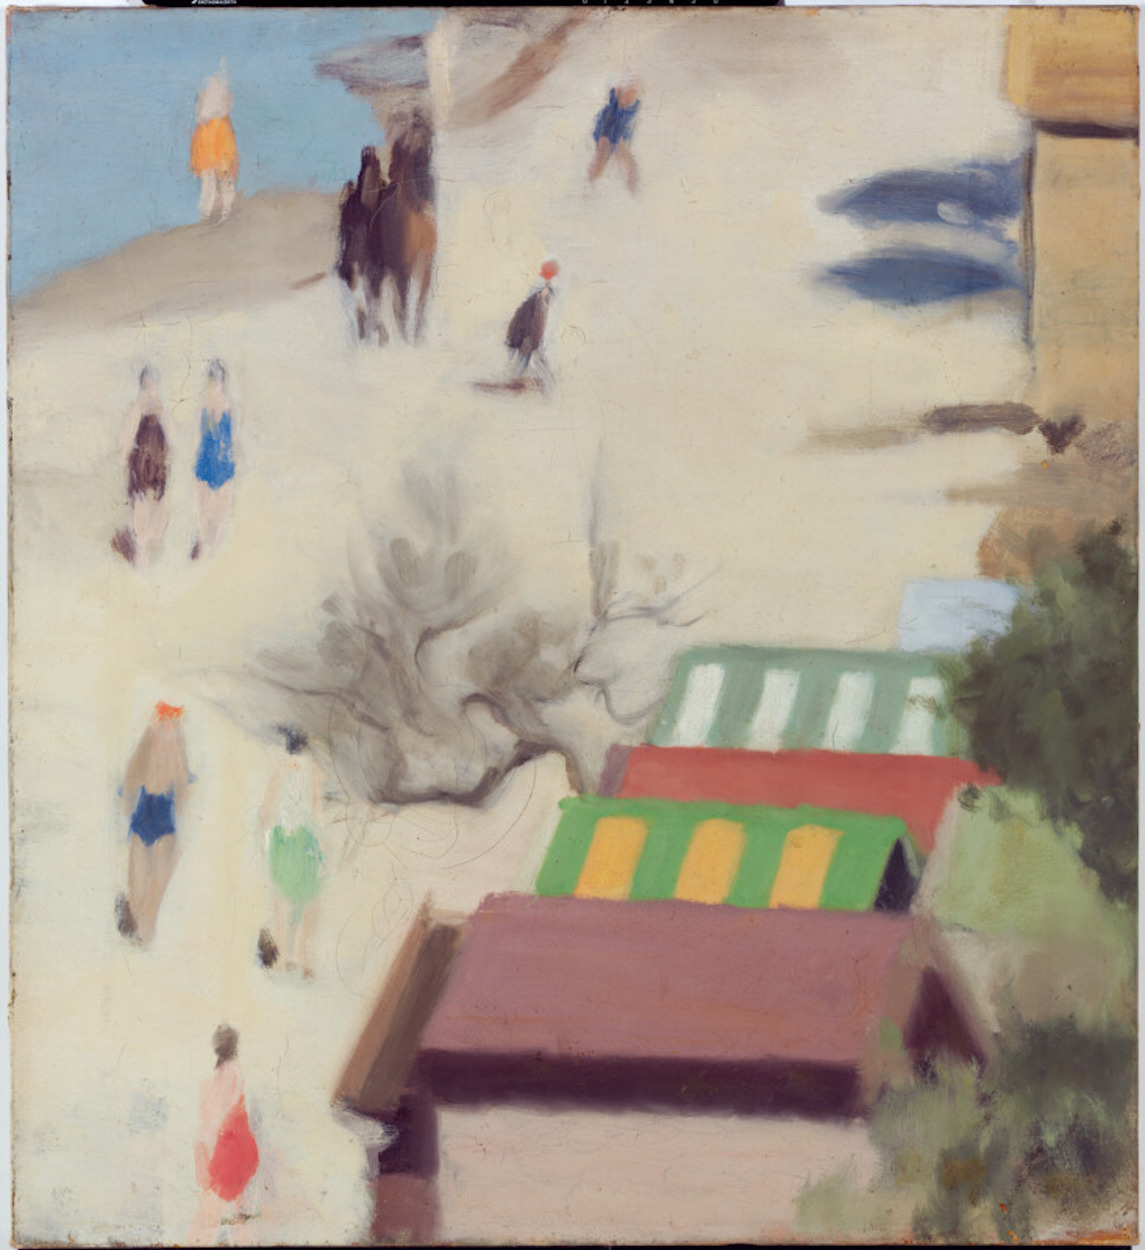 Sandringham Beach by Clarice Beckett - c. 1933 - 50.9 x 55.8 cm National Gallery of Australia